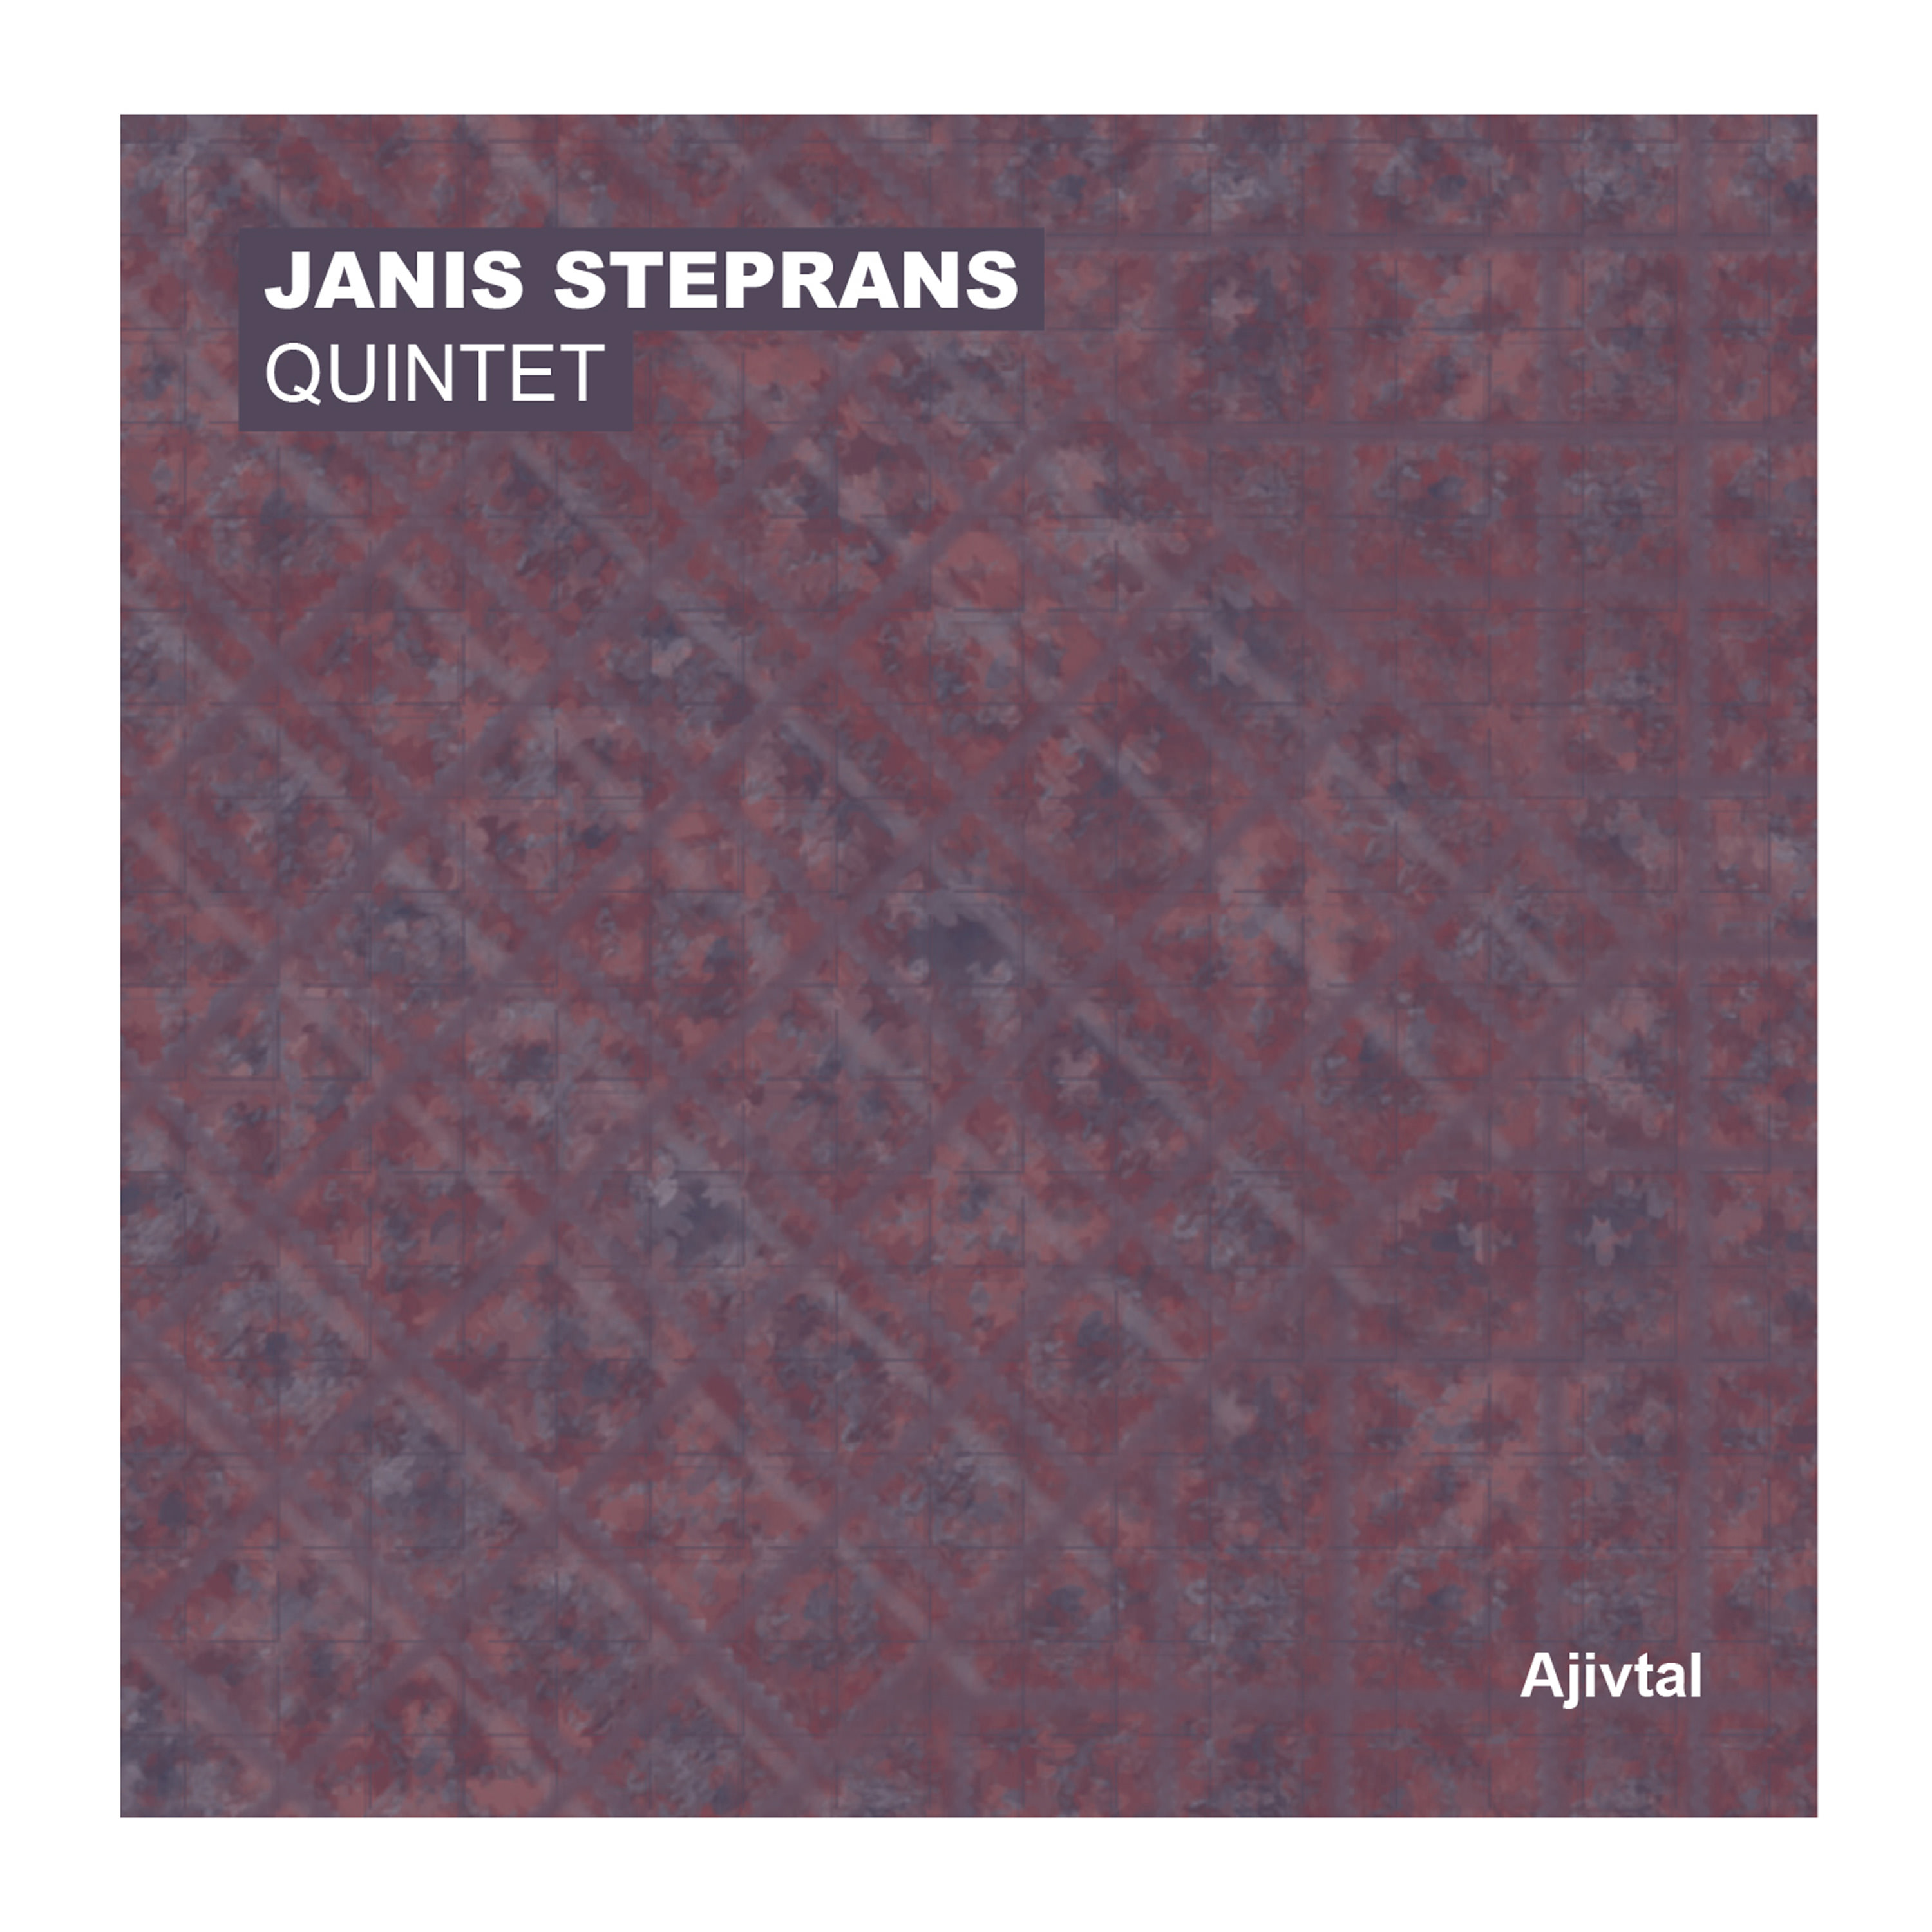 Janis Steprans – Ajivtal (2017) [HDTracks FLAC 24bit/96kHz]